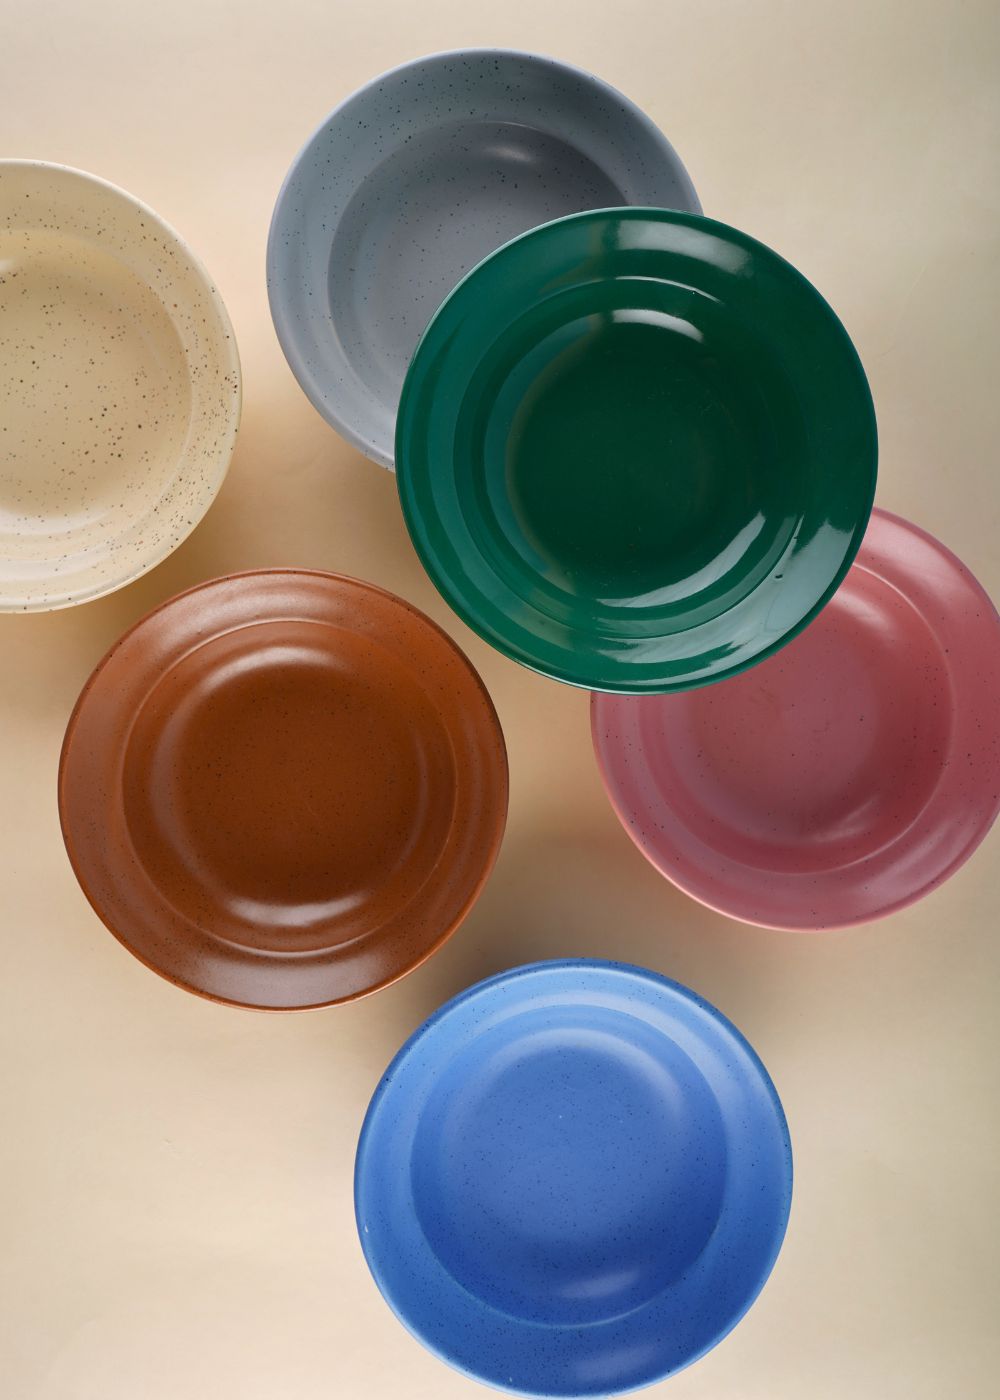 pasta plates made by ceramics